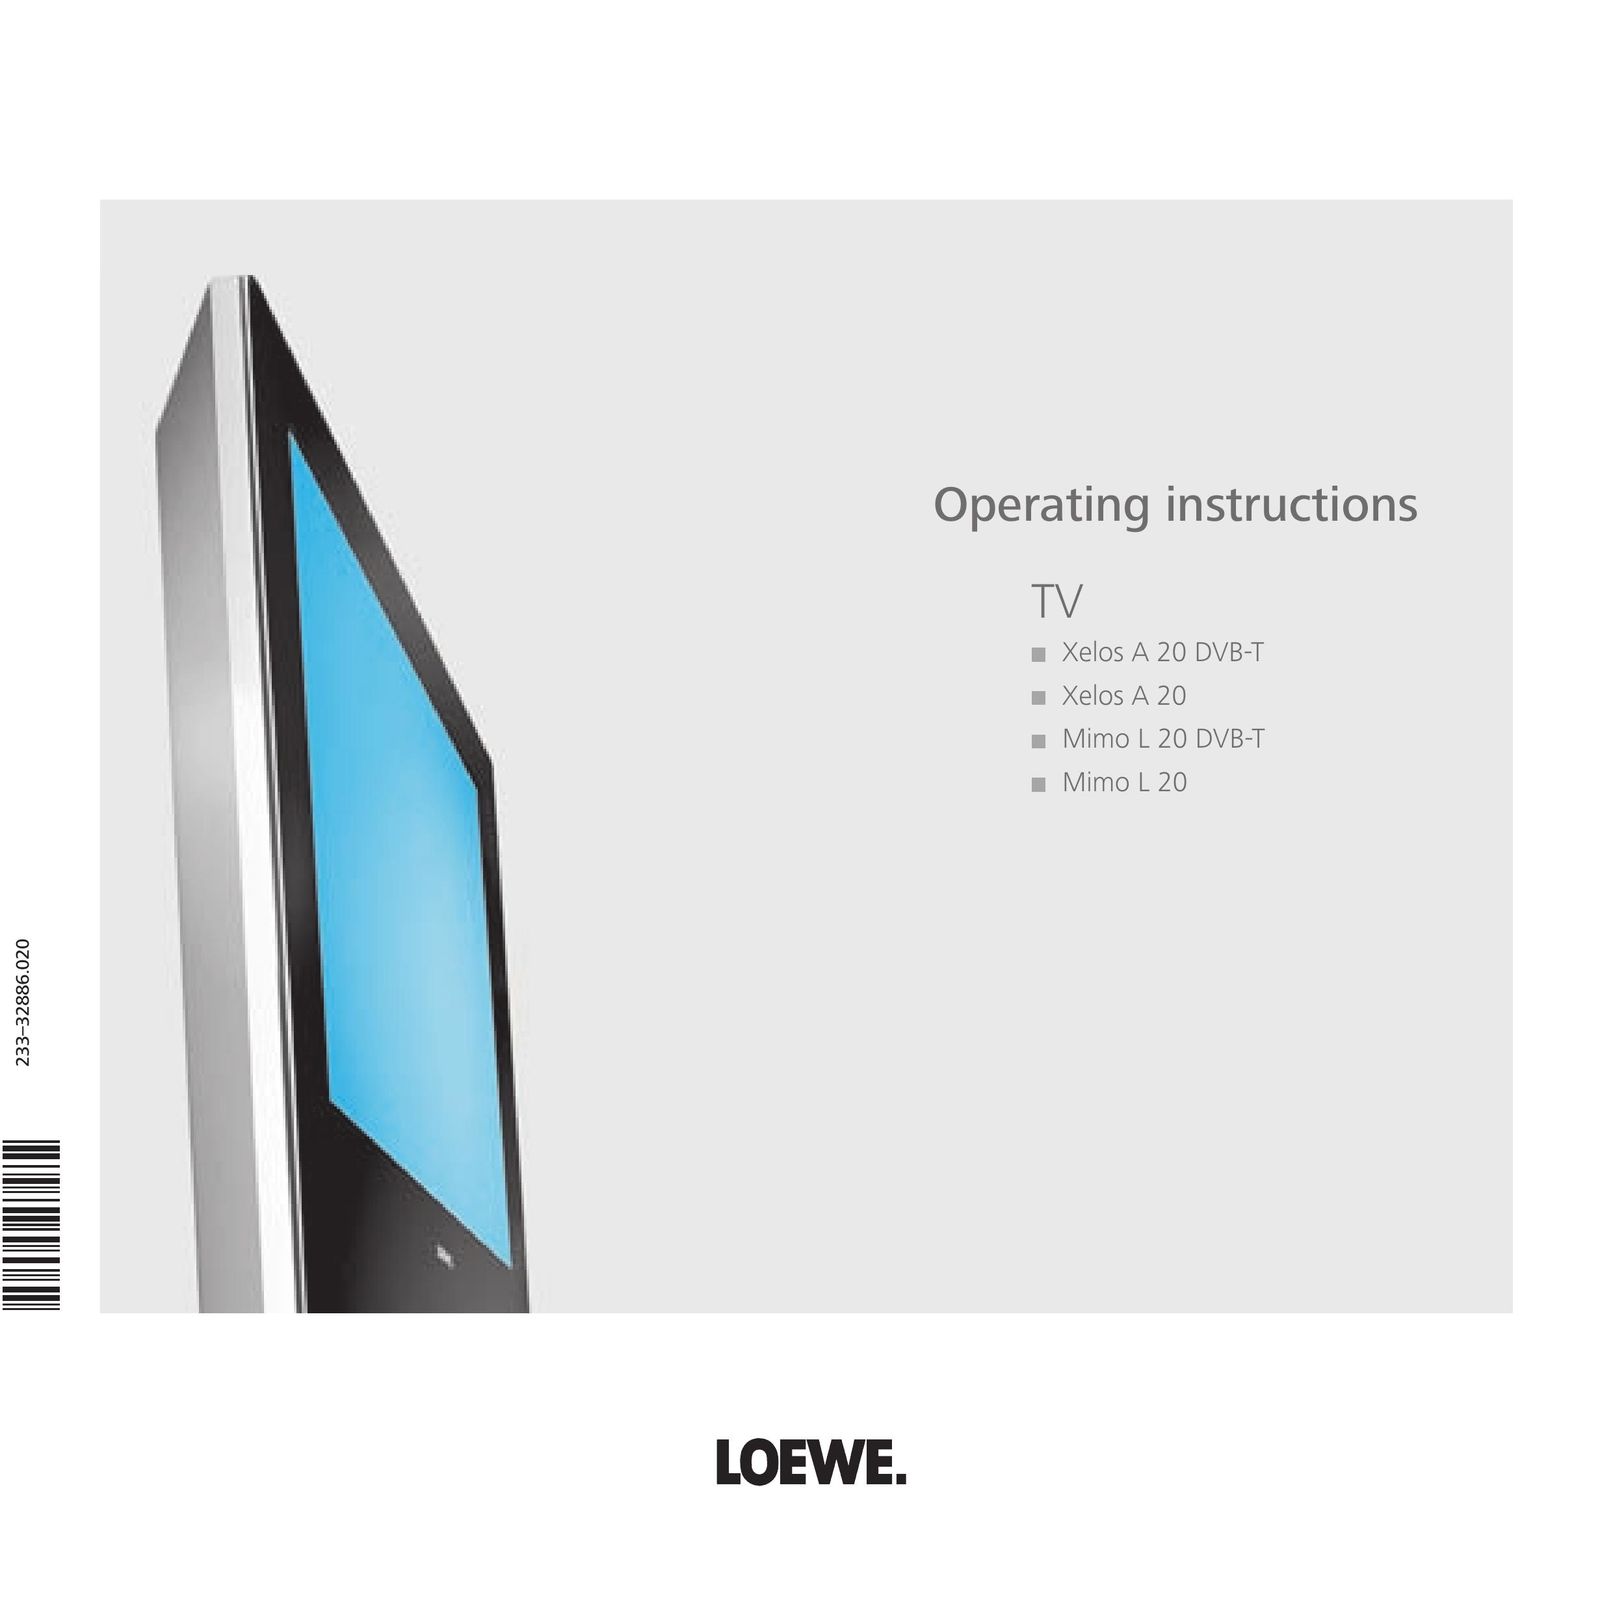 Loewe L 20 DVB-T Flat Panel Television User Manual